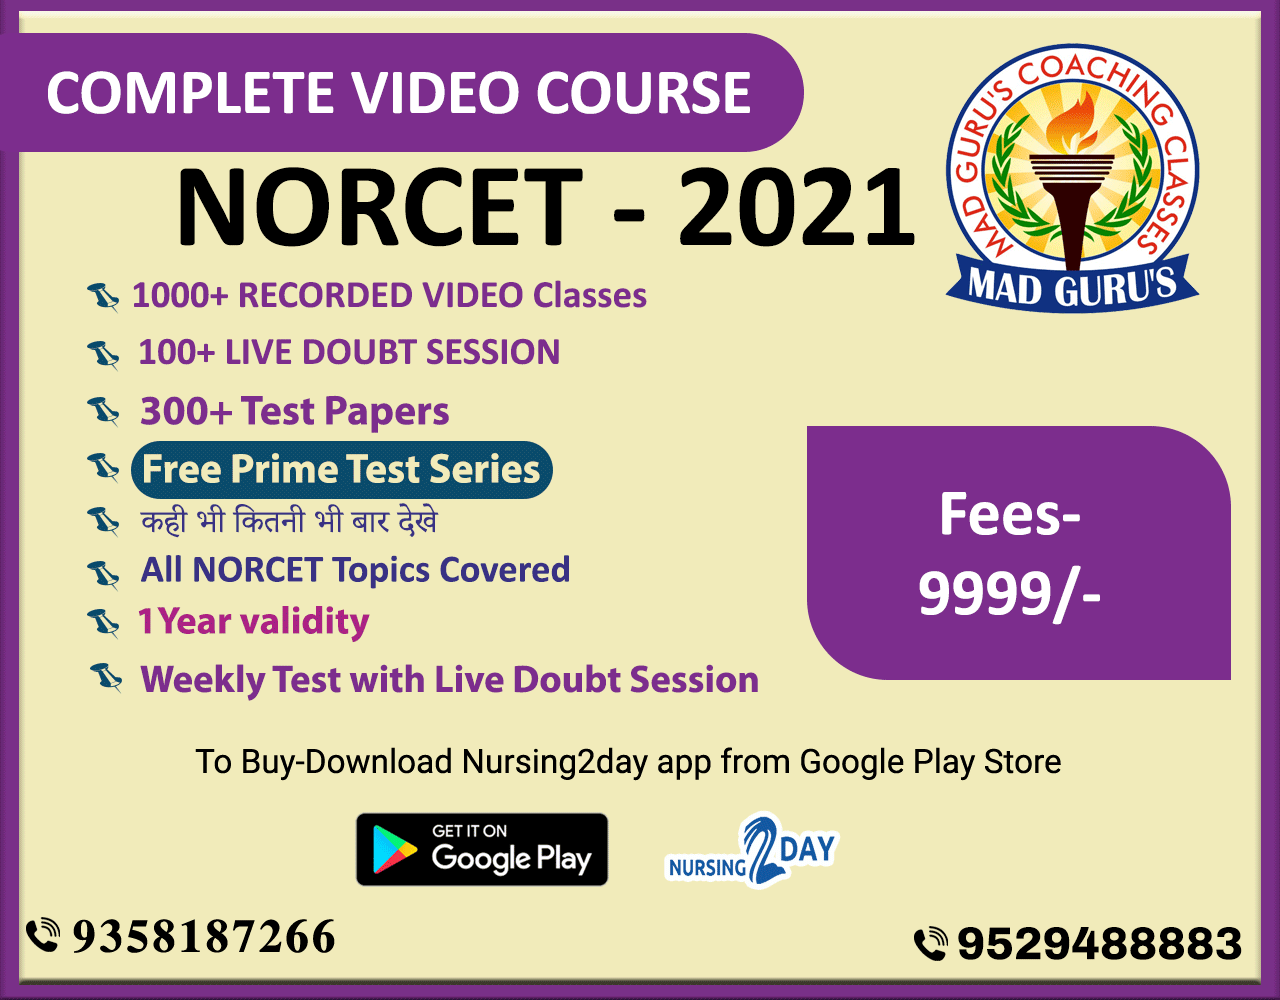 NORCET Membership - only 3600